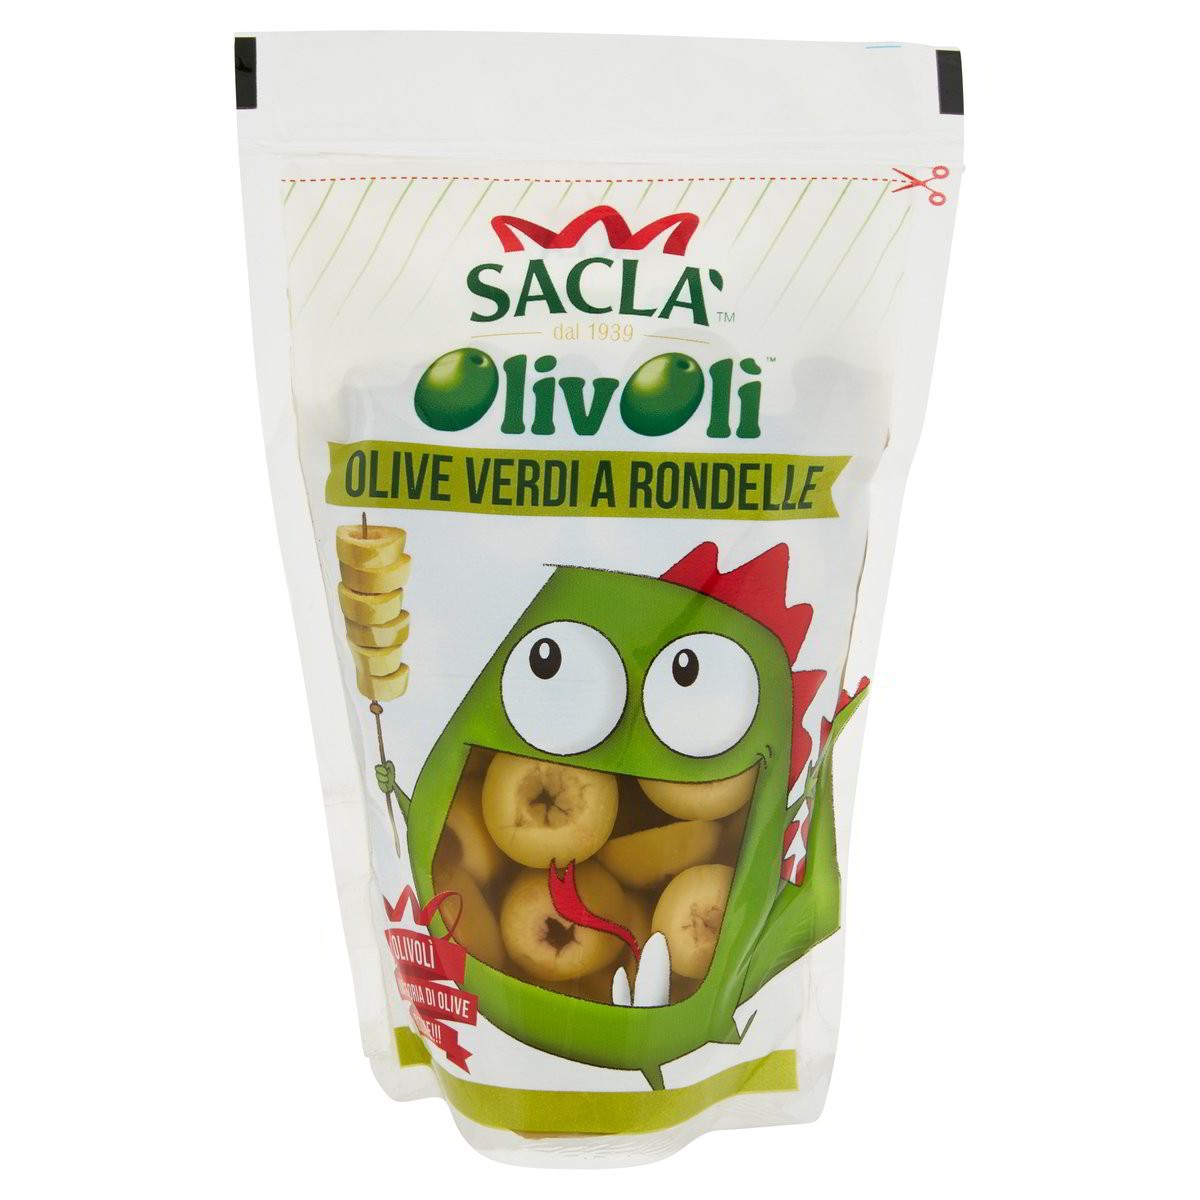 Saclà Olive verdi a rondelle in salamoia Olivolì